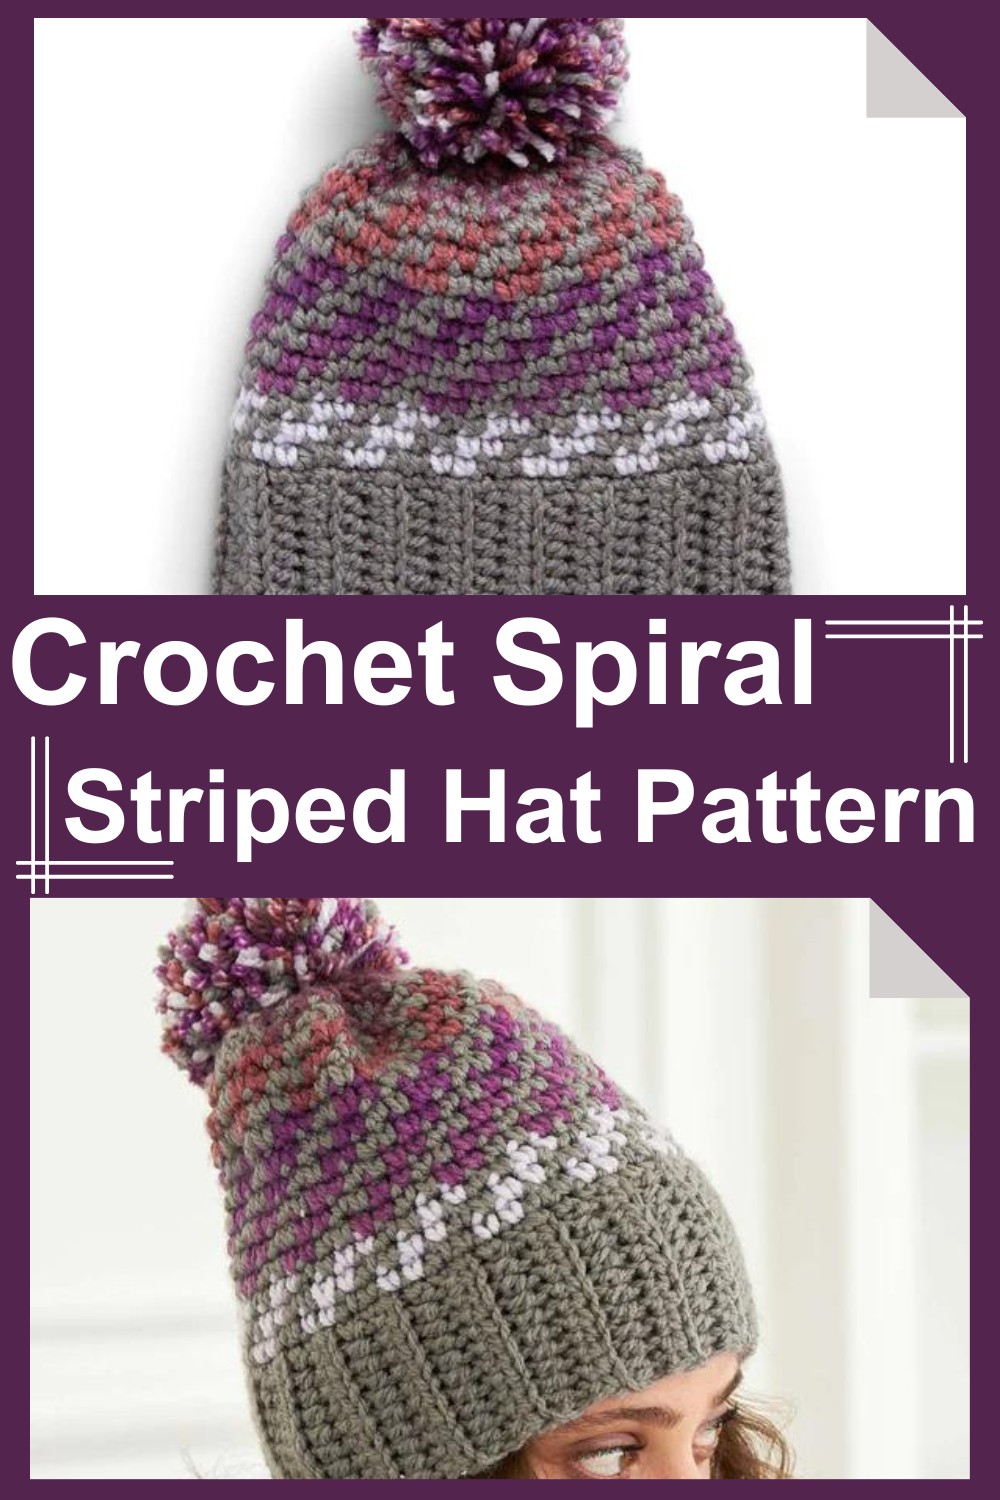 Crochet Spiral Striped Hat Pattern